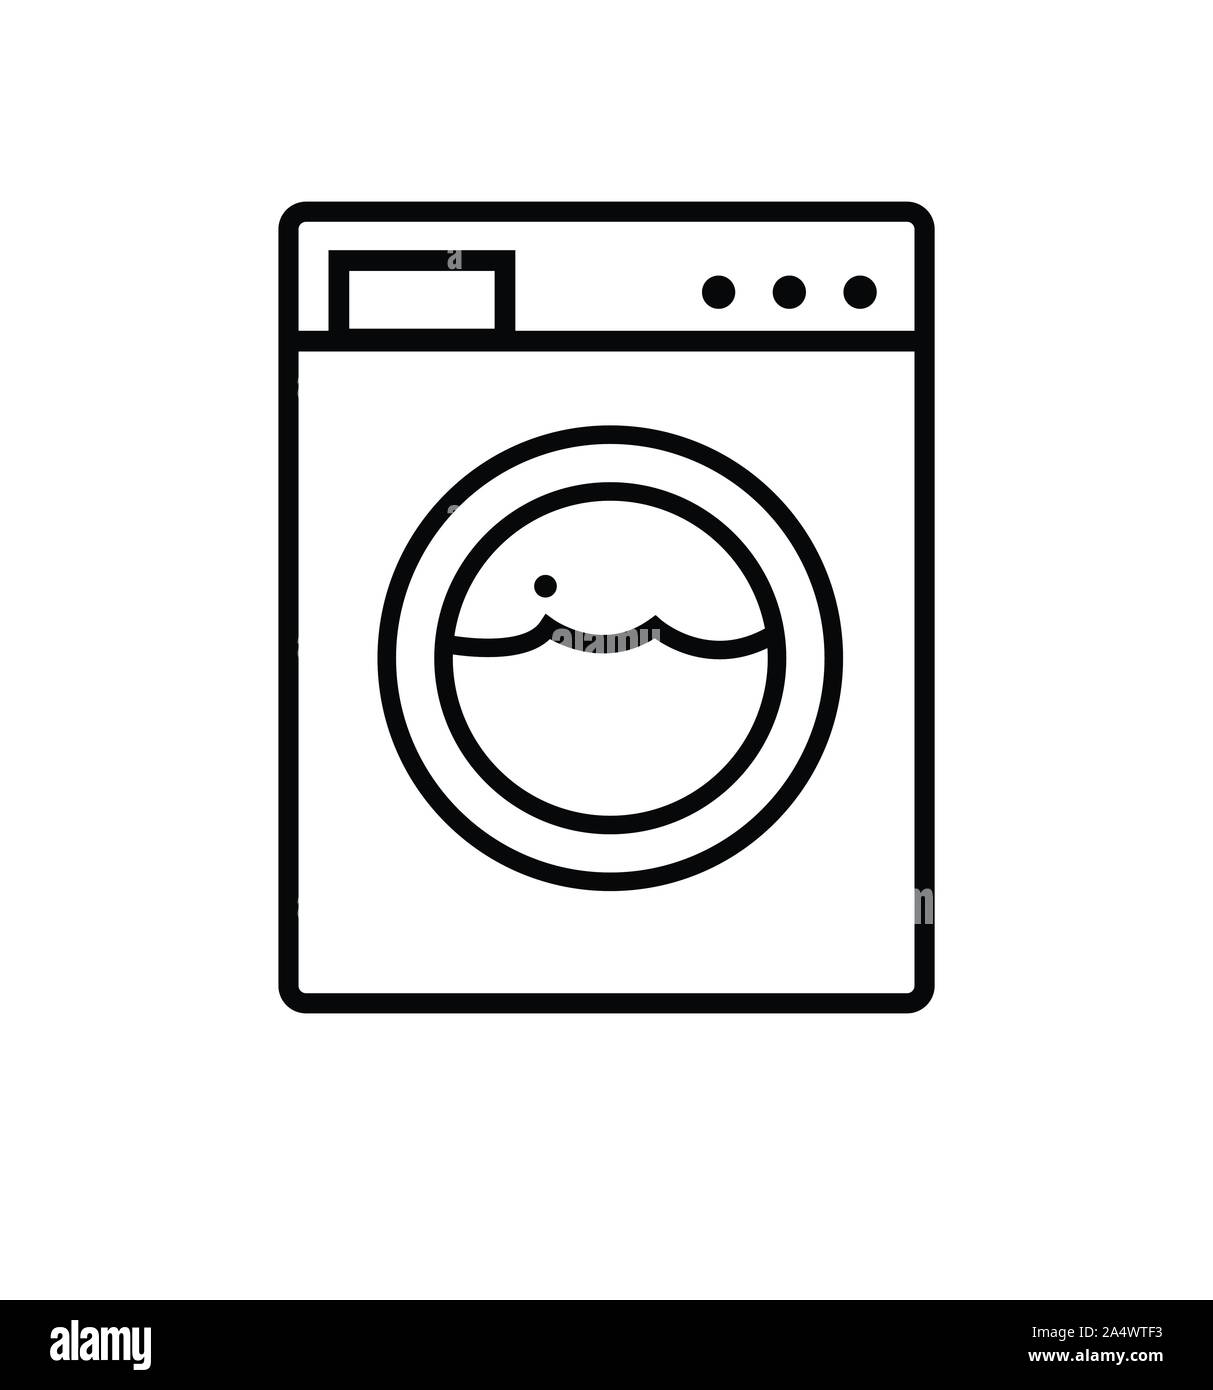 Washing machine line icon appliances symbol flat Stock Vector